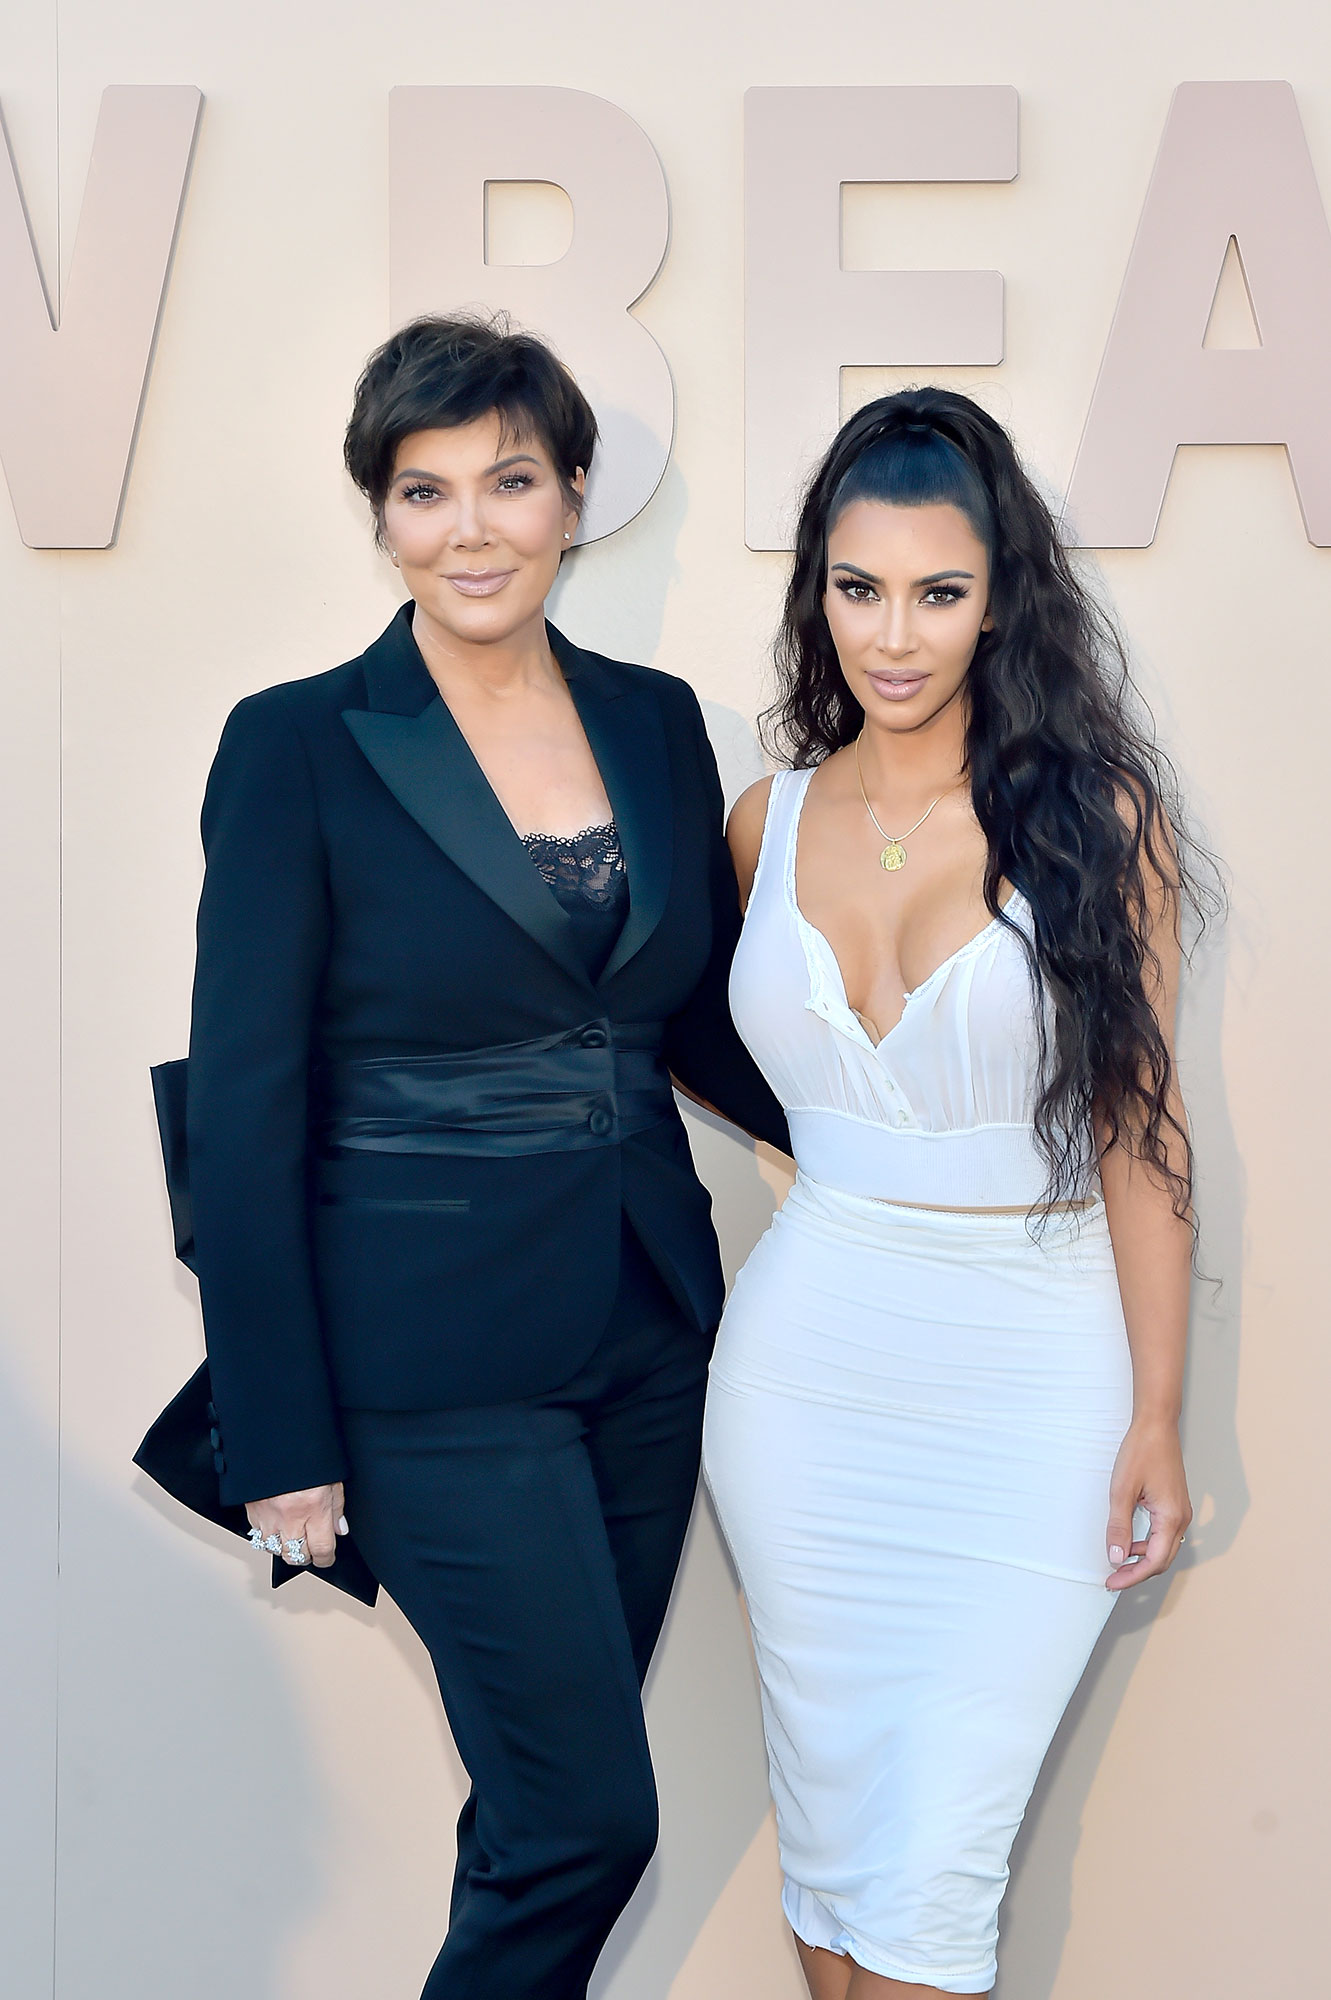 The Best Things Kim Kardashian Has Said About Motherhood